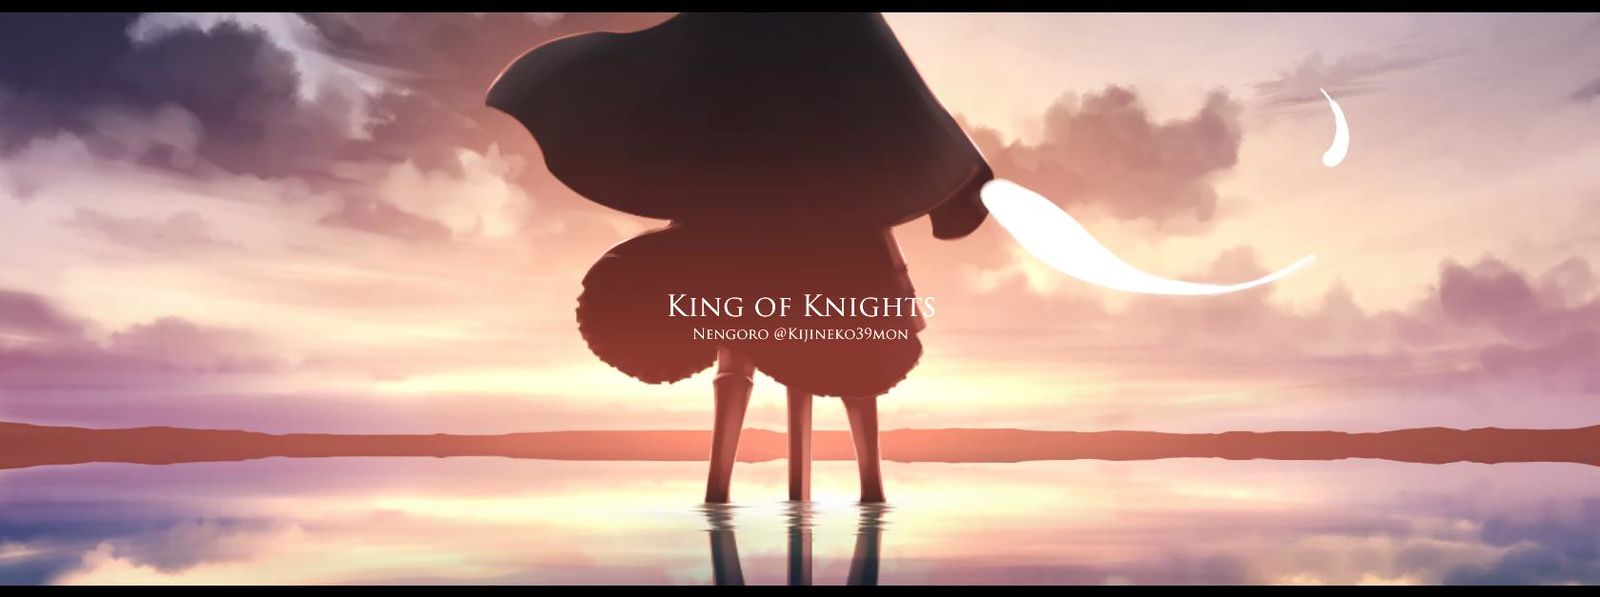 King of Knights插画图片壁纸